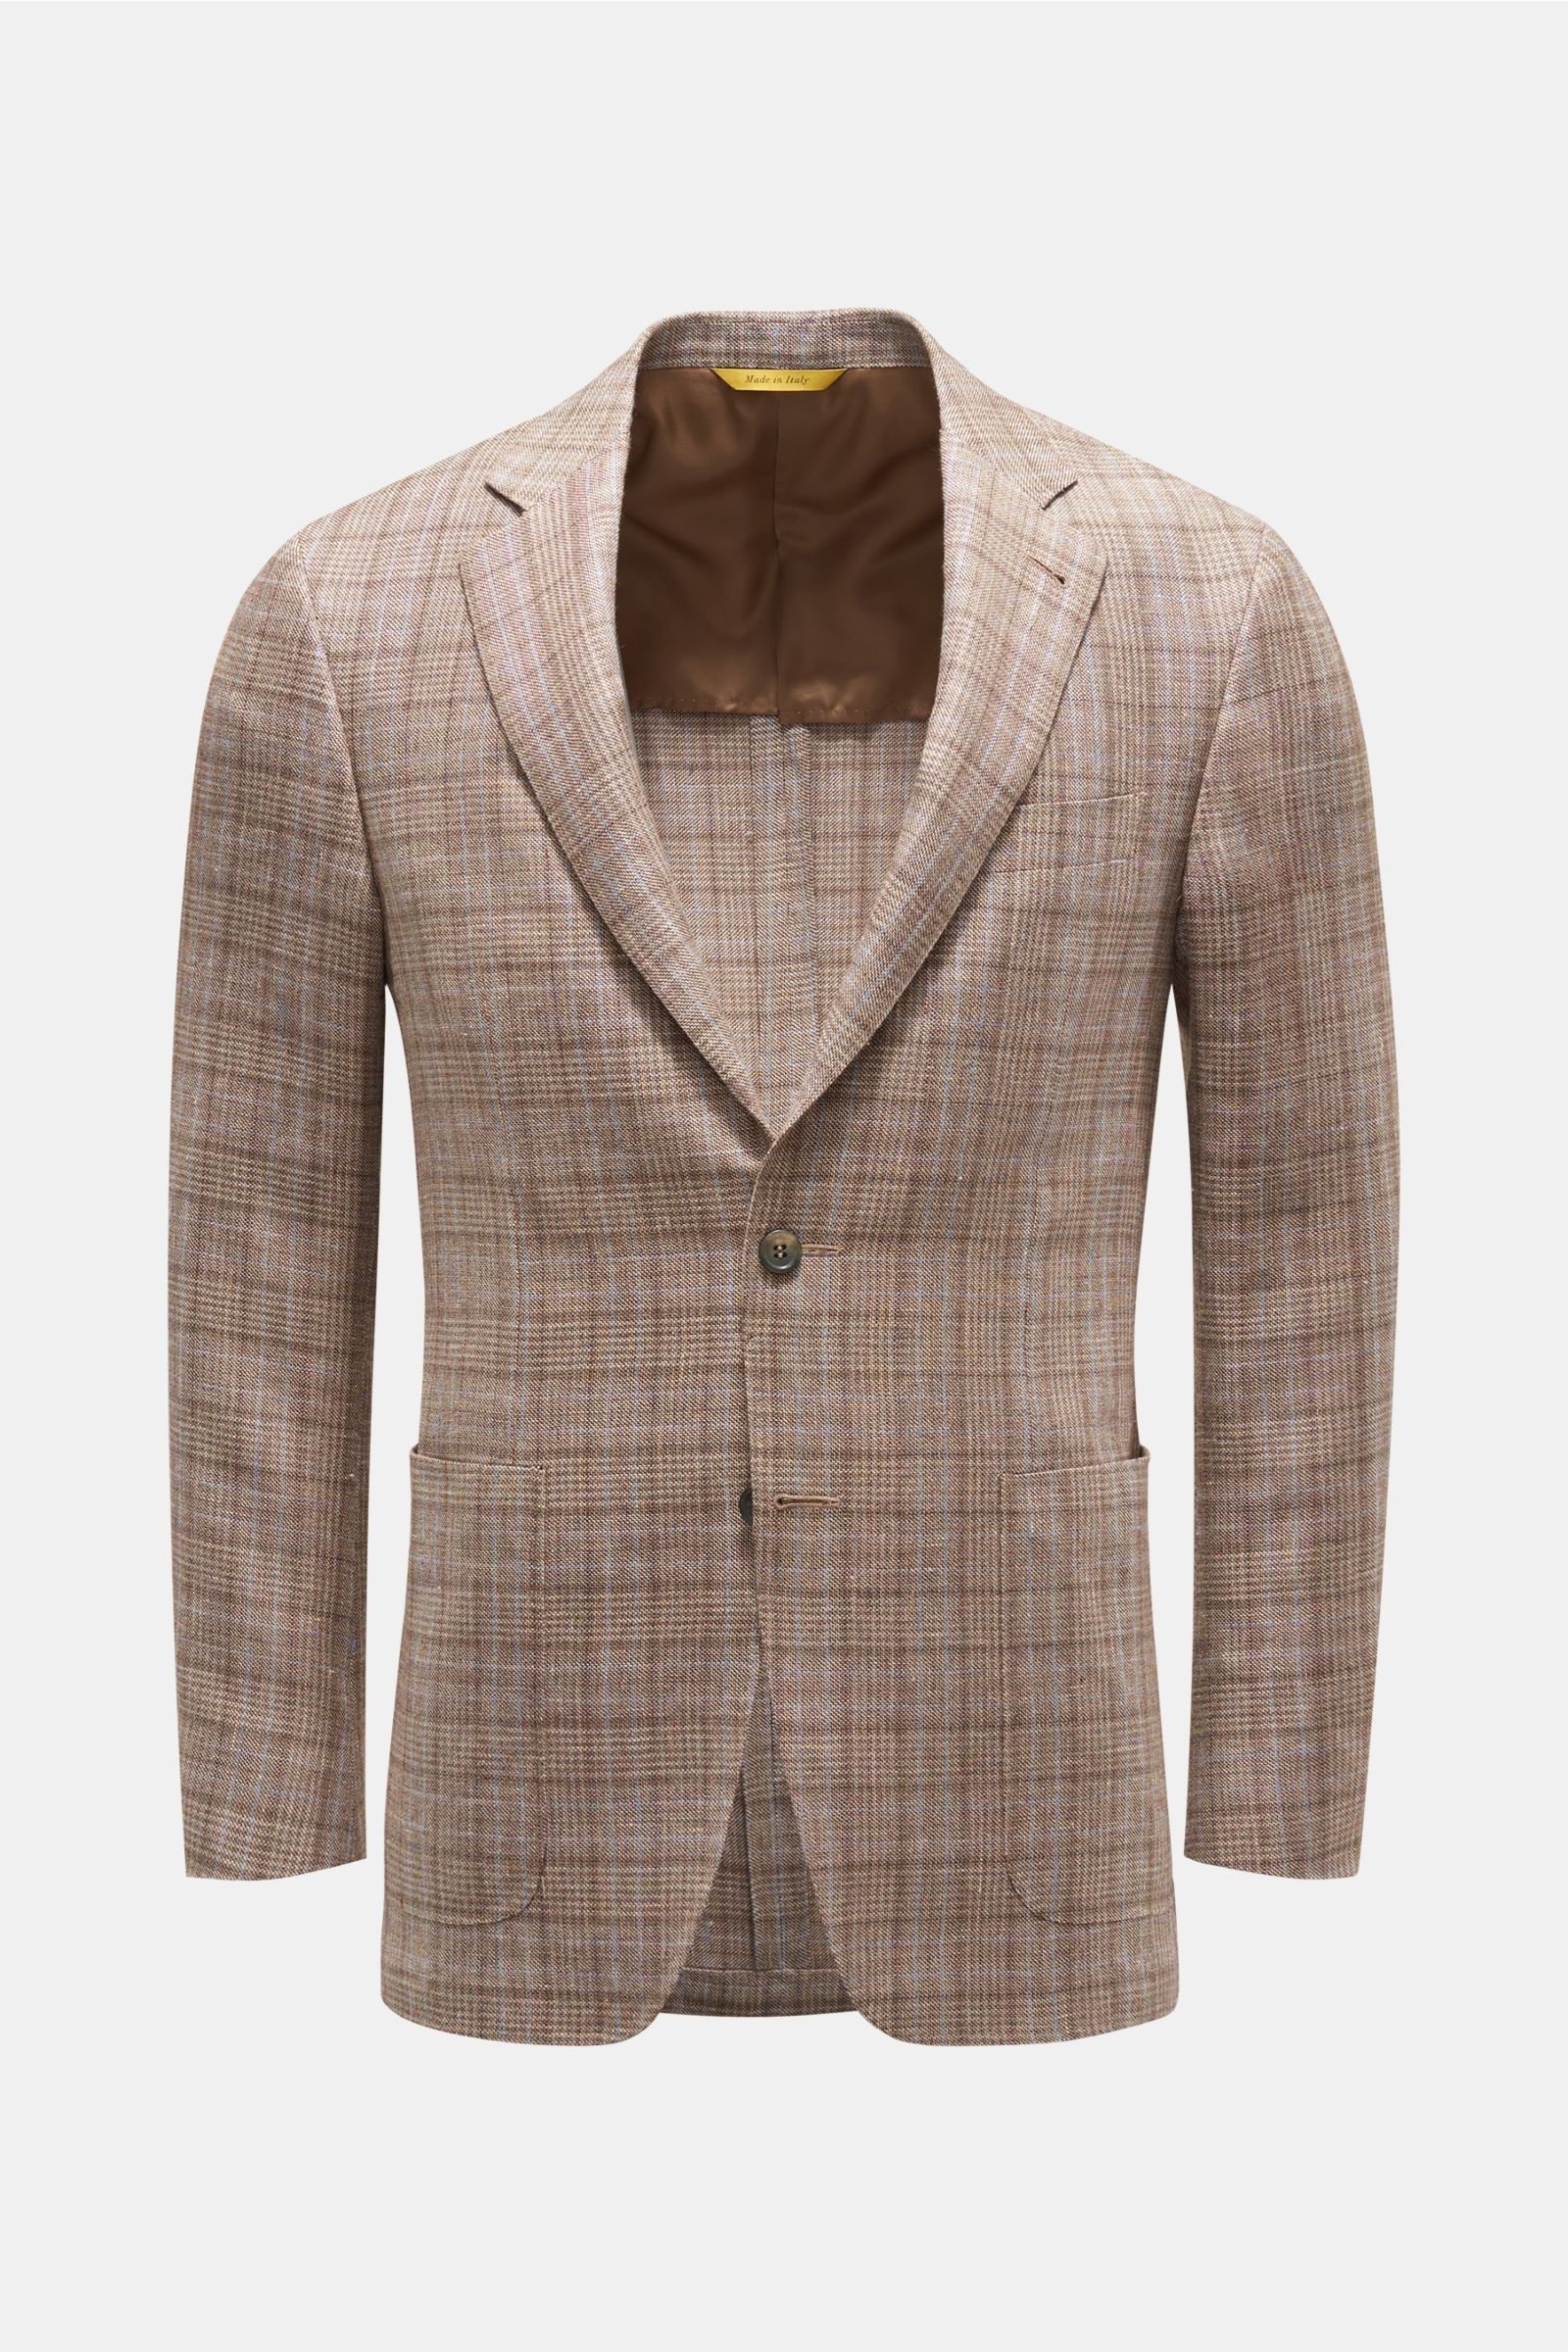 Smart-casual jacket 'Kei' grey-brown checked